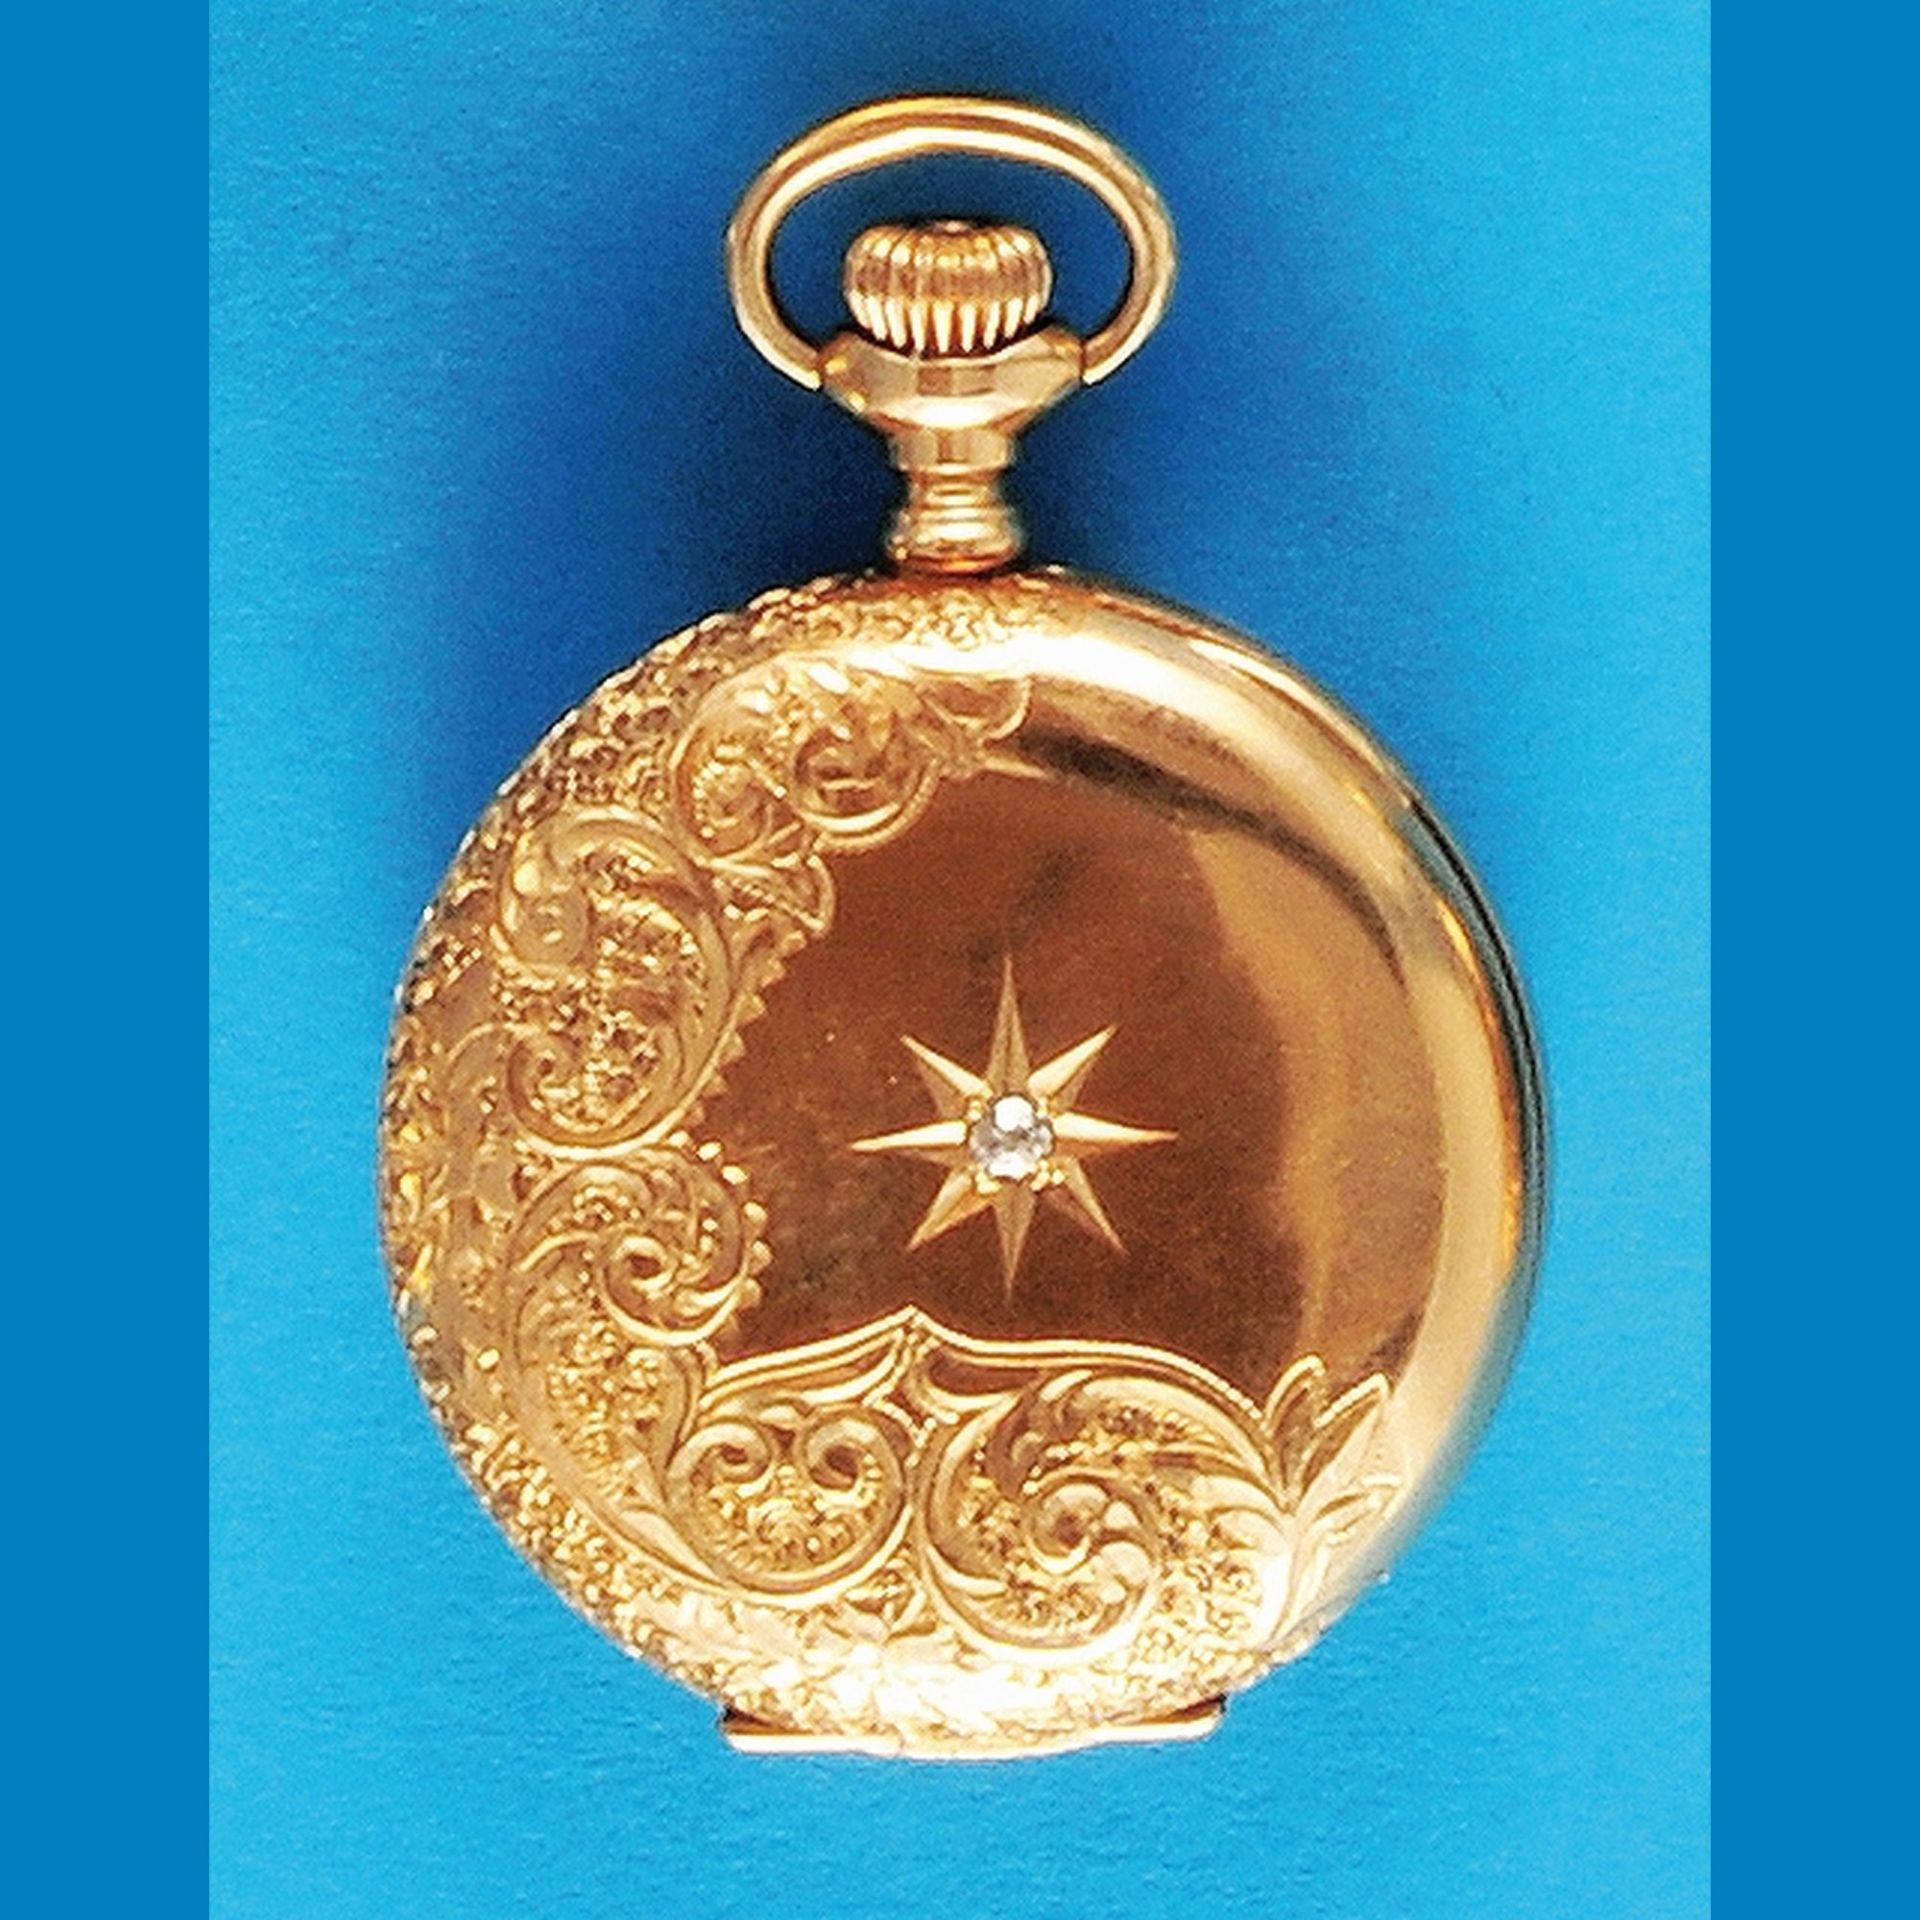 Elgin Natl. Watch Co., „Charles H. Hambly, Philadelphia", ladies golden juwelry pocket watch